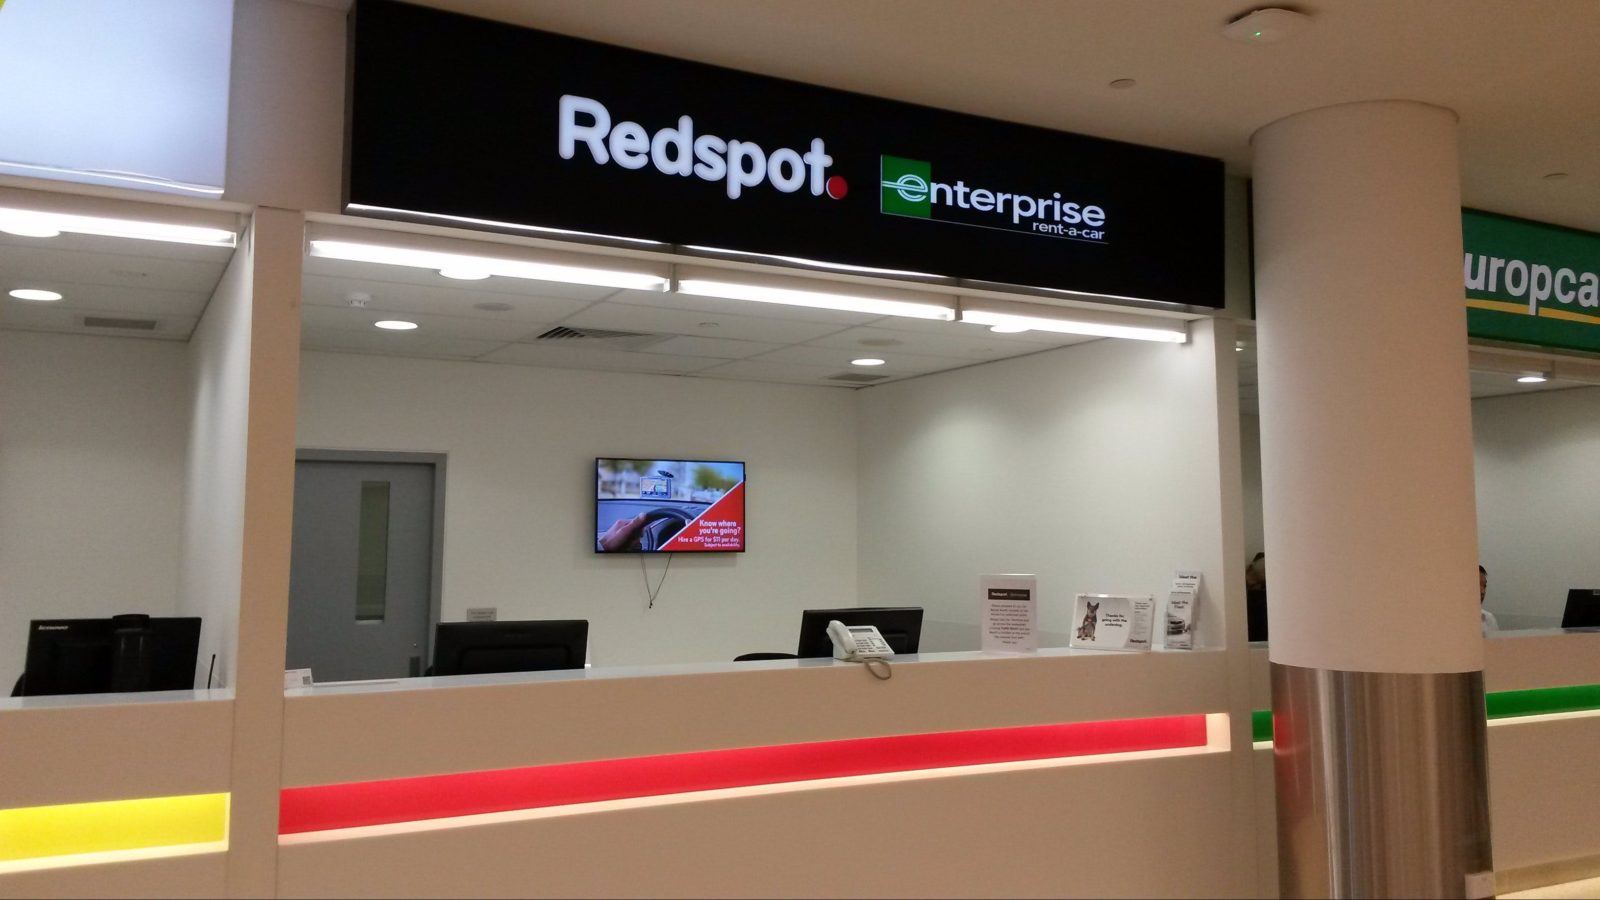 Redspot Enterprise Perth Airport, Perth, Western Australia